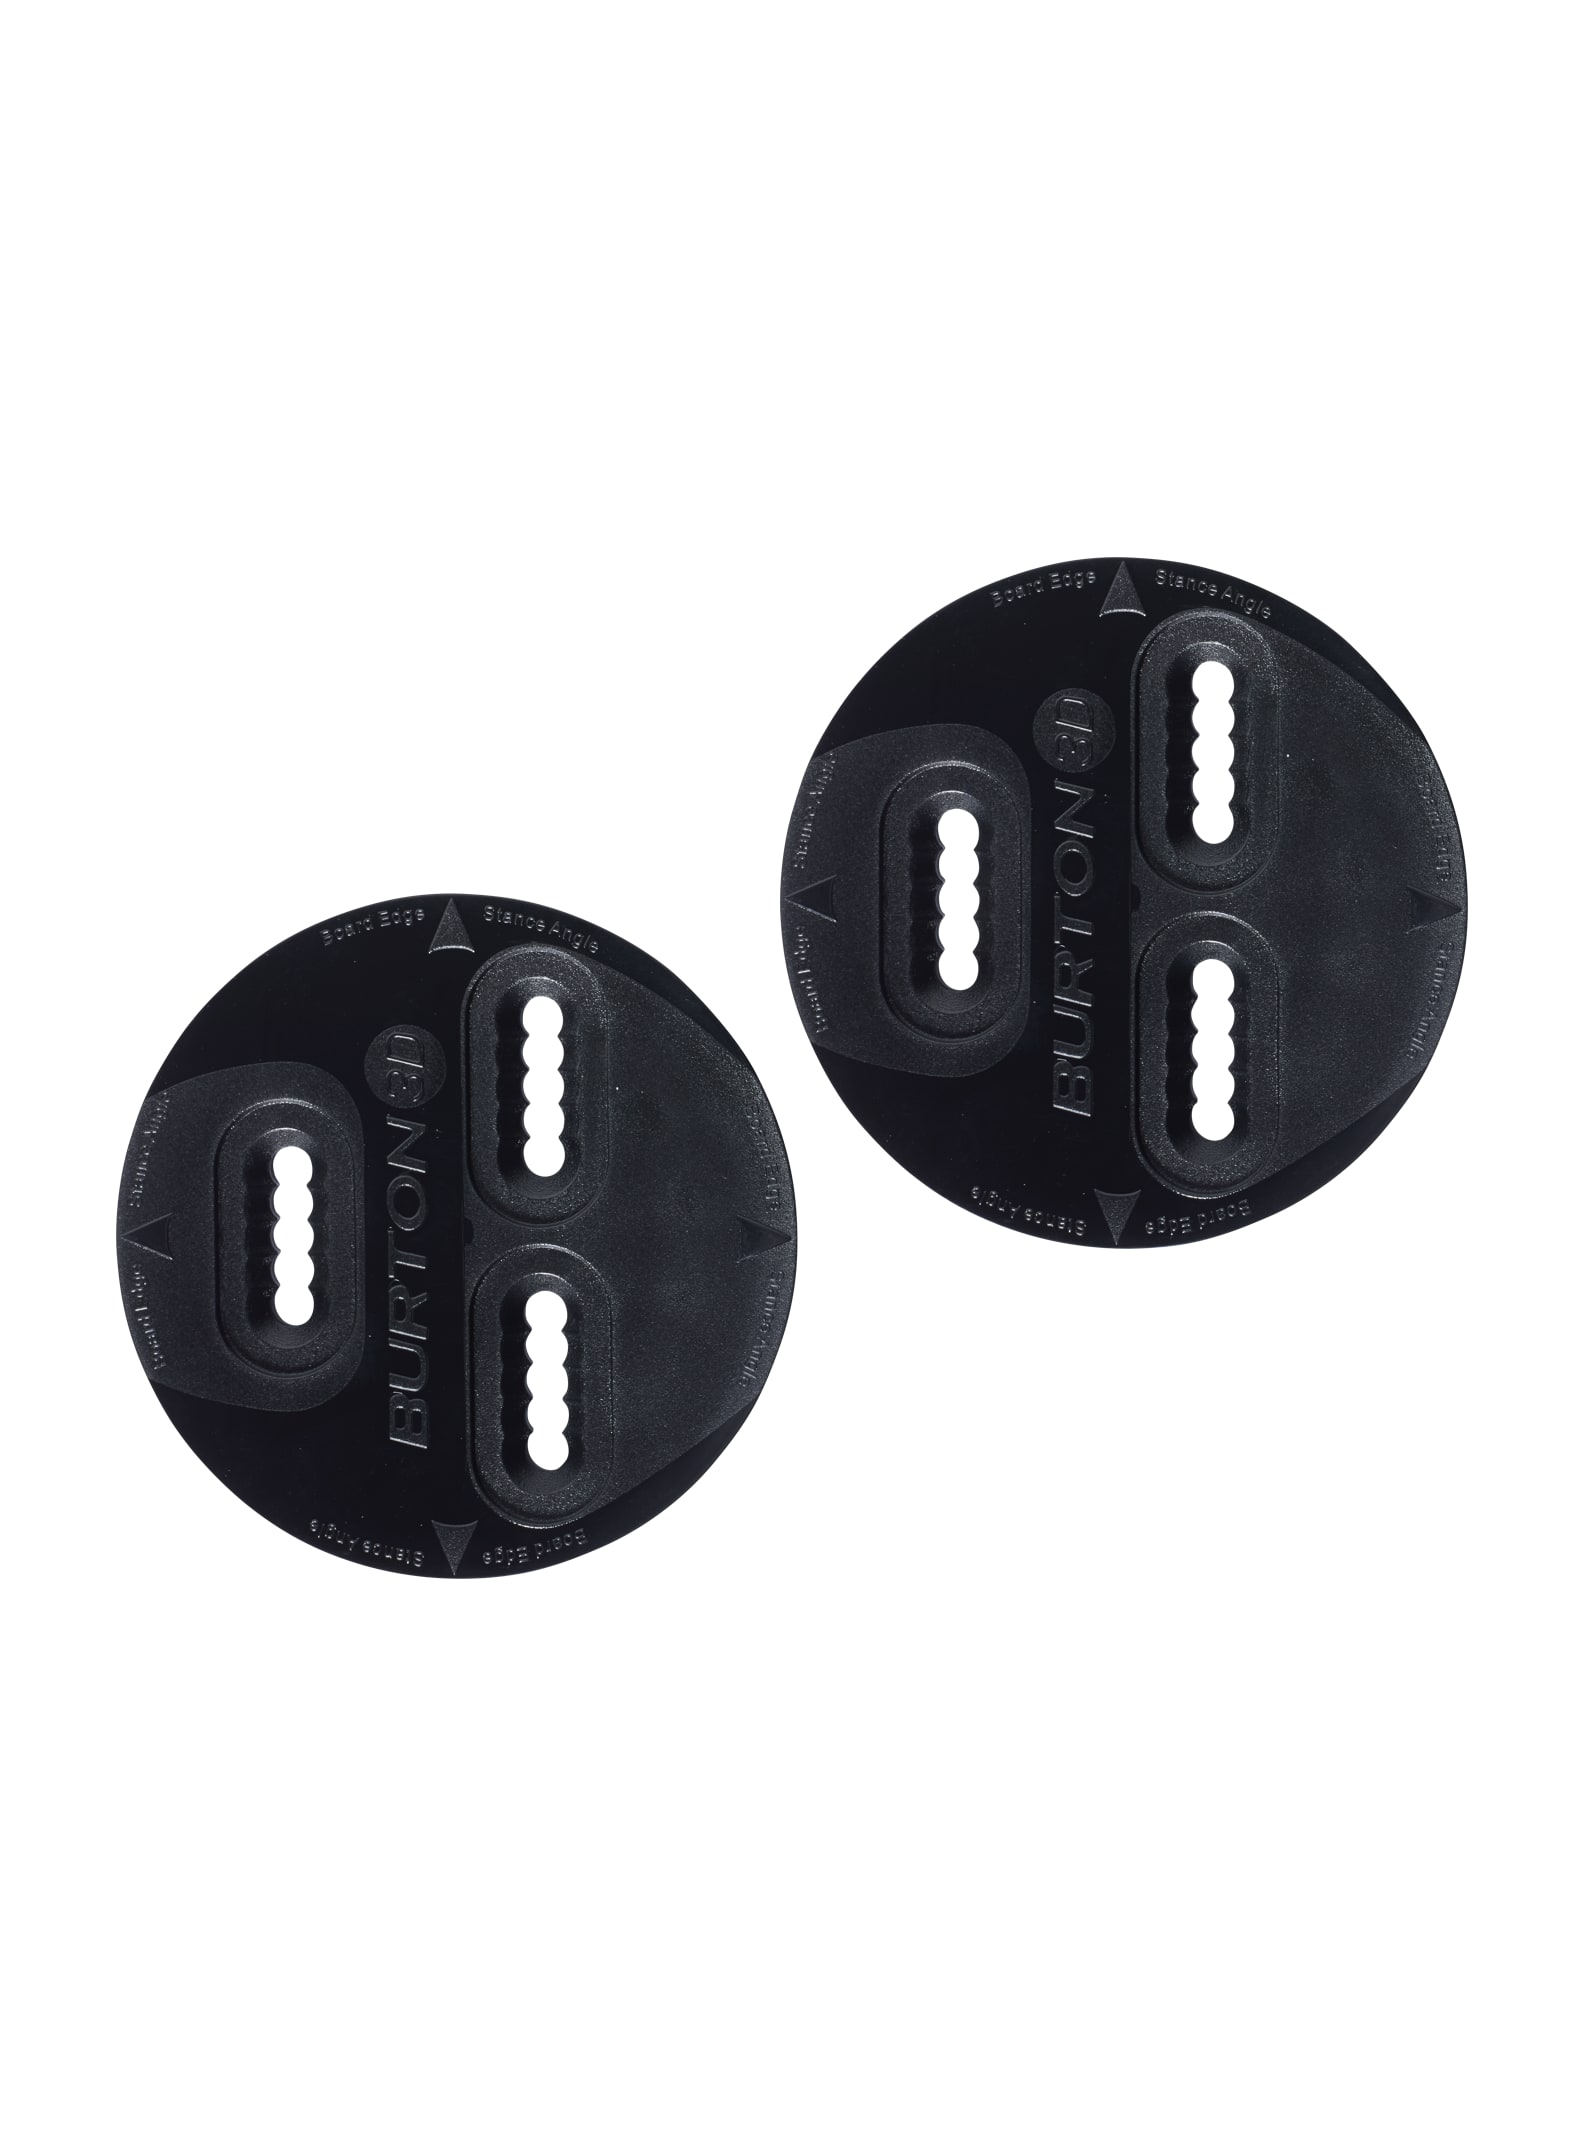 New Burton ReFlex binding baseplate discs Black No hardware 